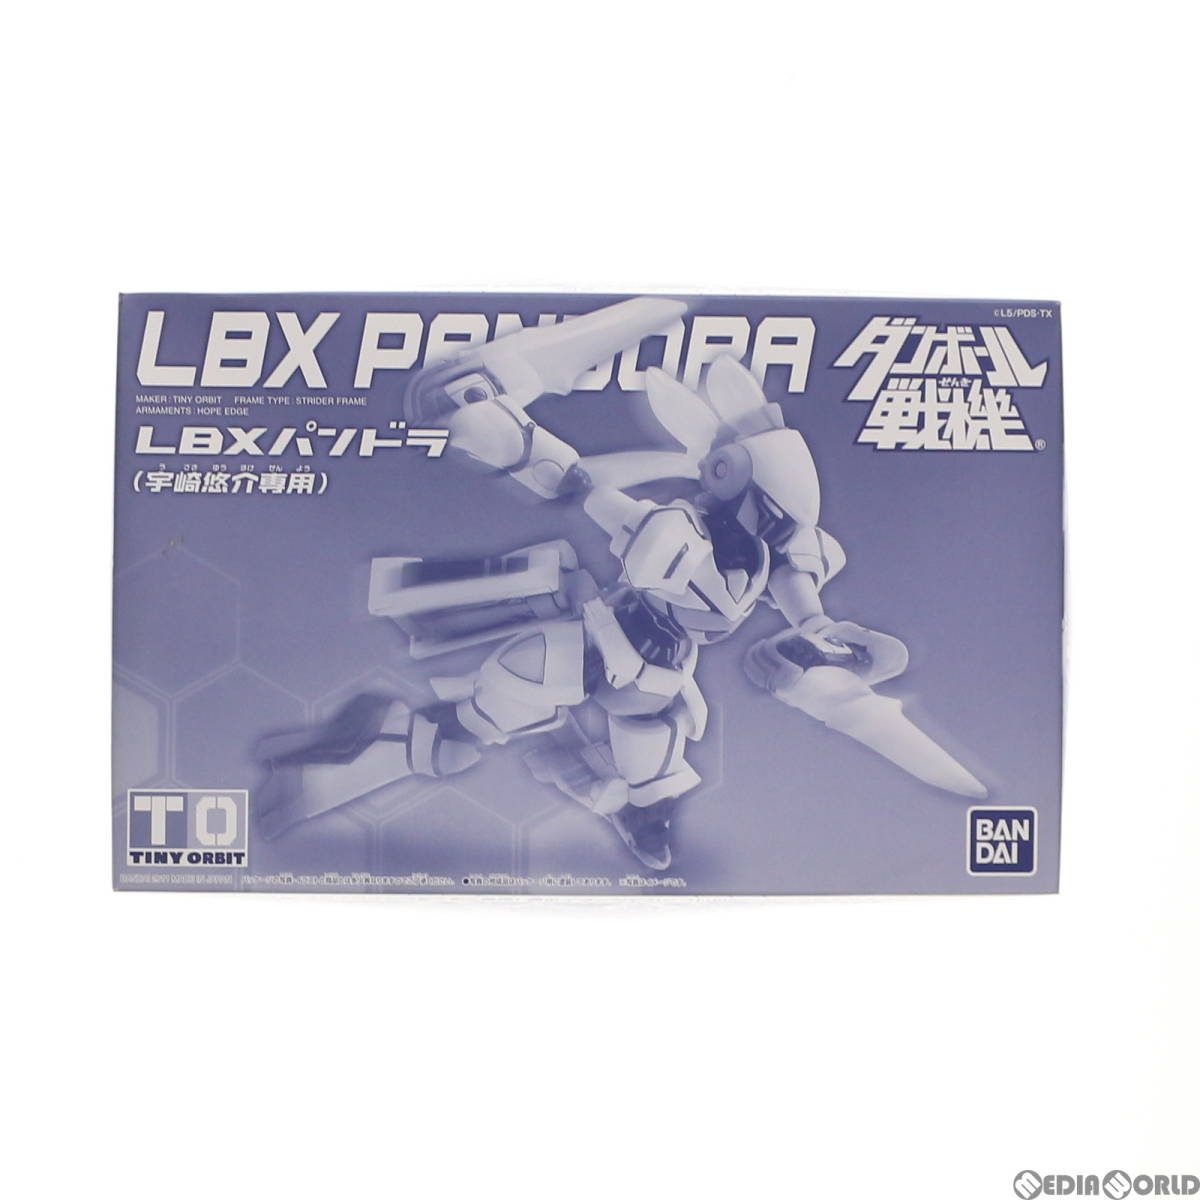 [ used ][PTM] premium Bandai limitation LBX bread gong (. cape .. exclusive use ) Danball Senki plastic model (0173120) Bandai (63009268)